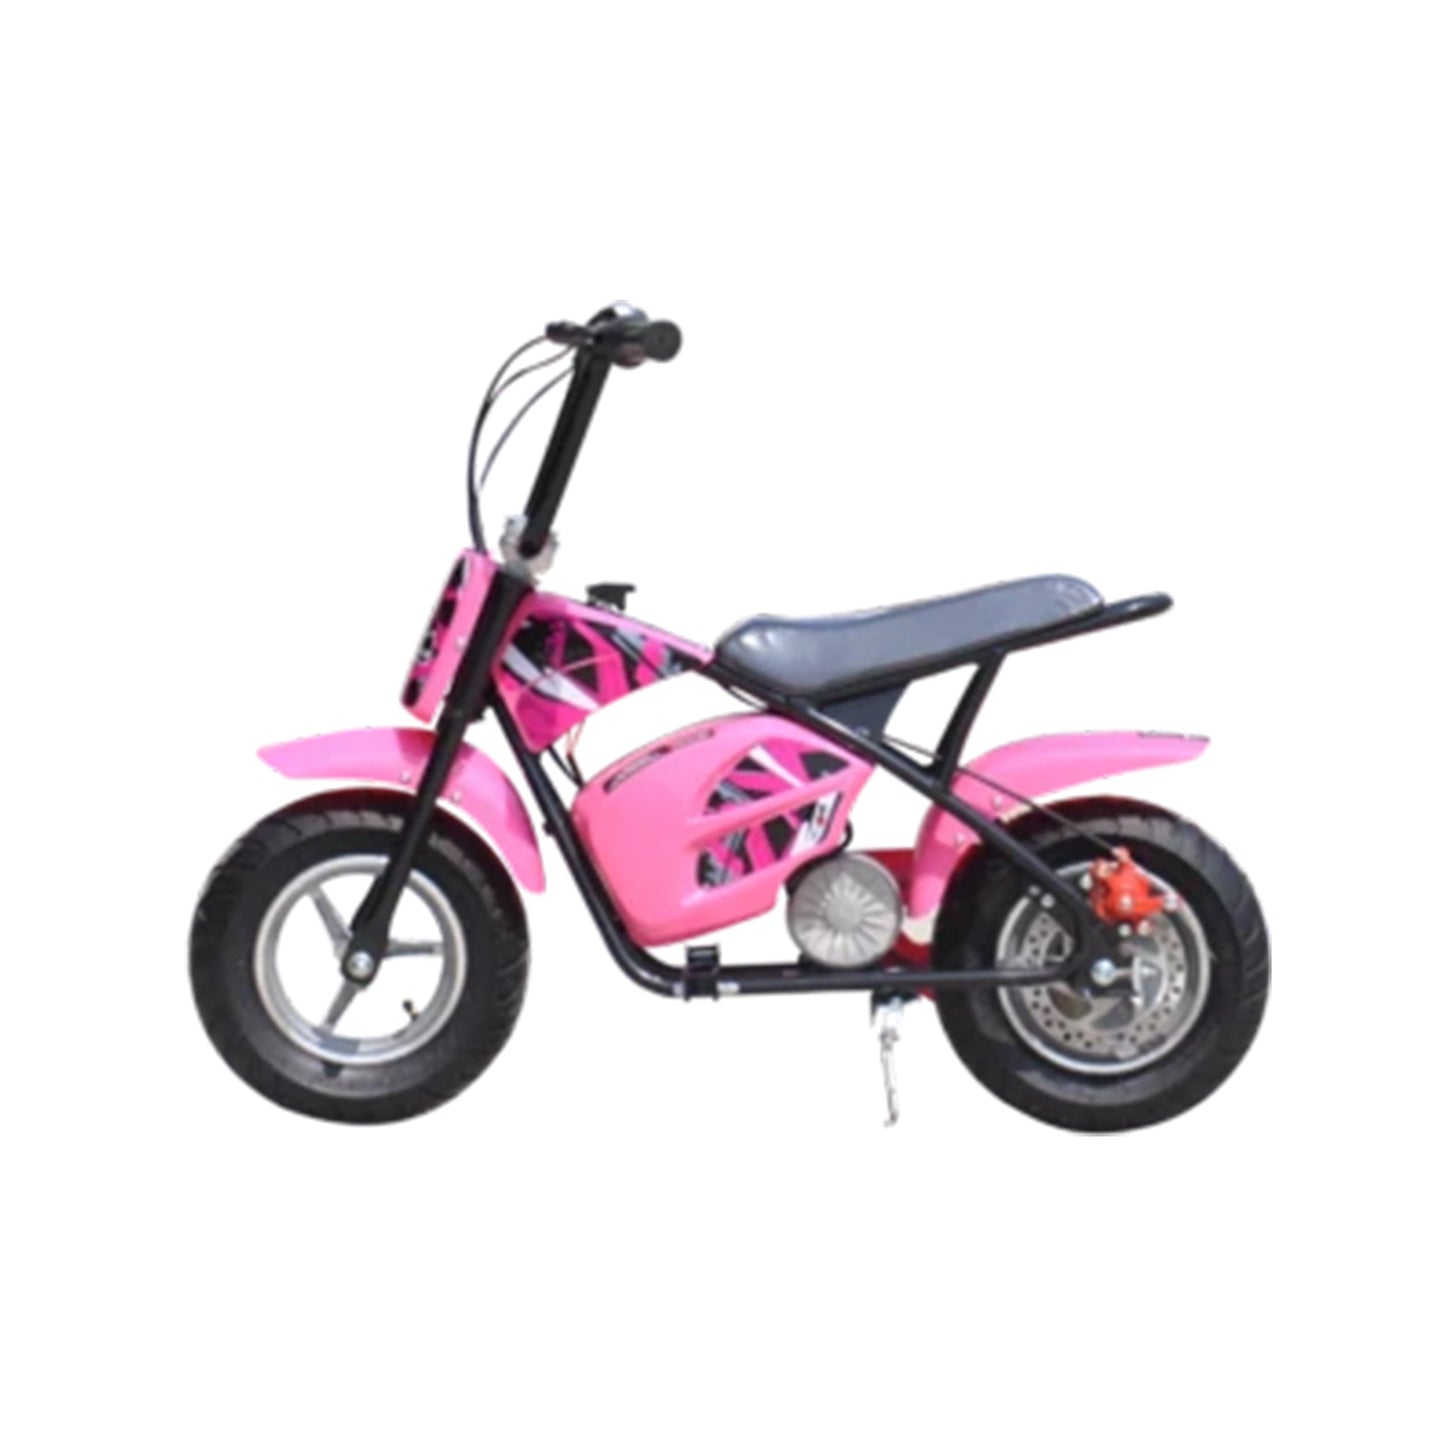 "Pink Mini Dirt Bike Scrambler, electric ride-on for kids, 250 Watt 12 Volt with stabilisers, white background - by Kids Dirt Bike."